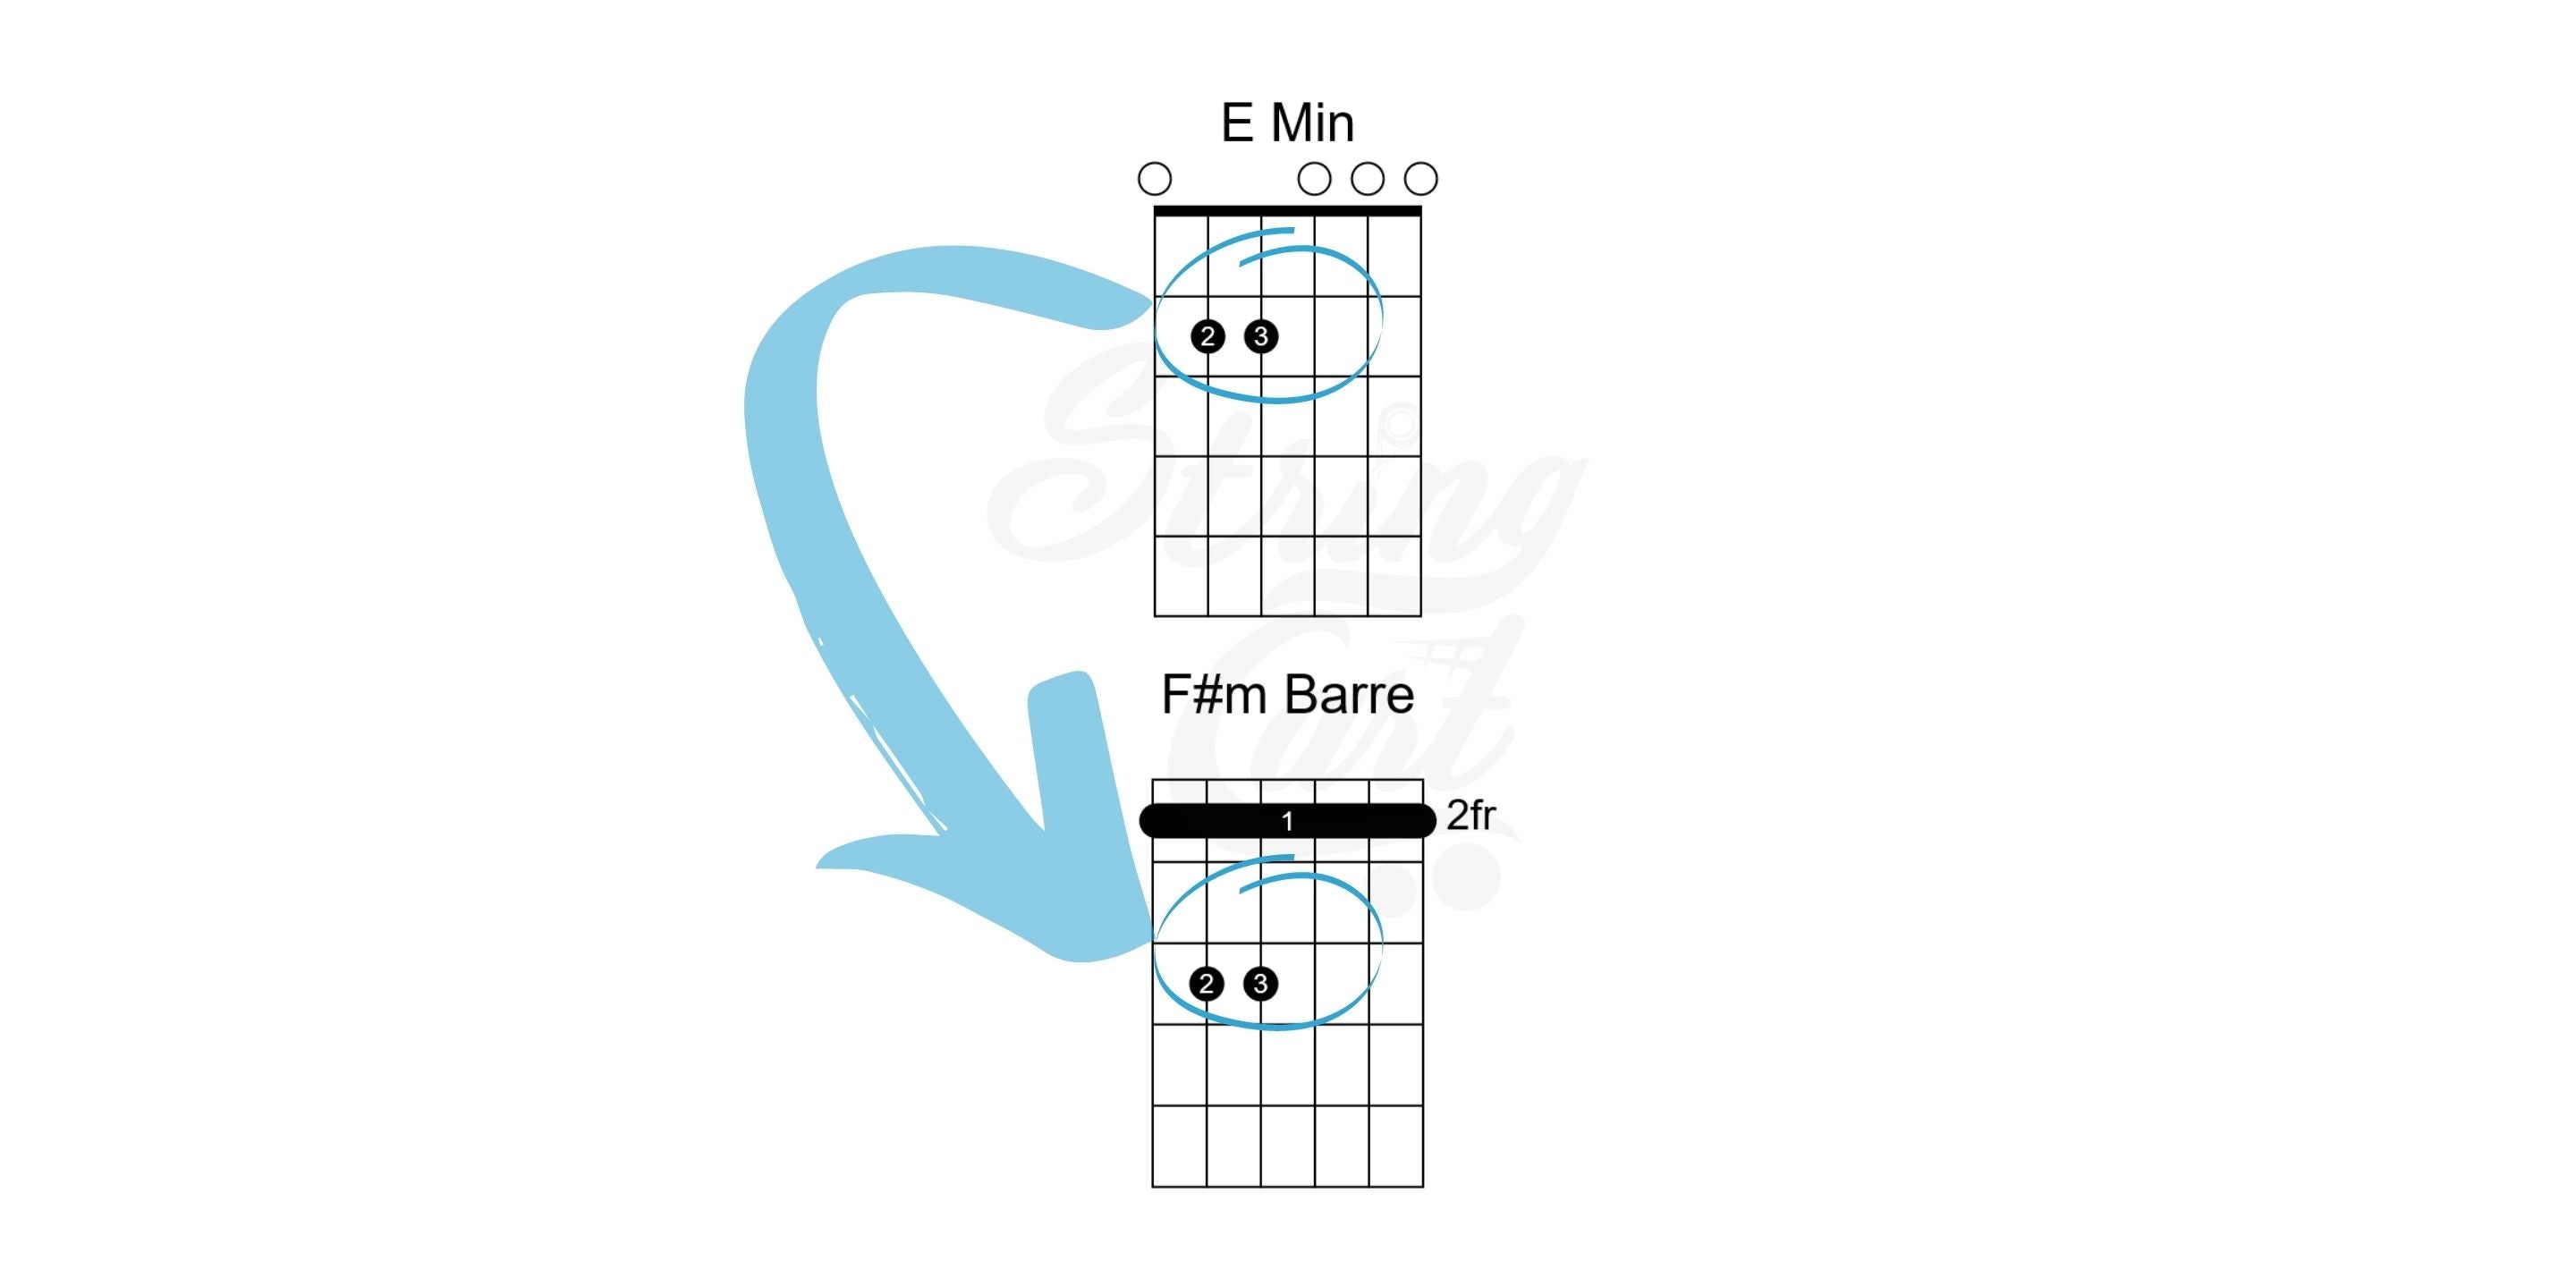 F# Minor Bar Chord Shape Using E Minot Open Shape